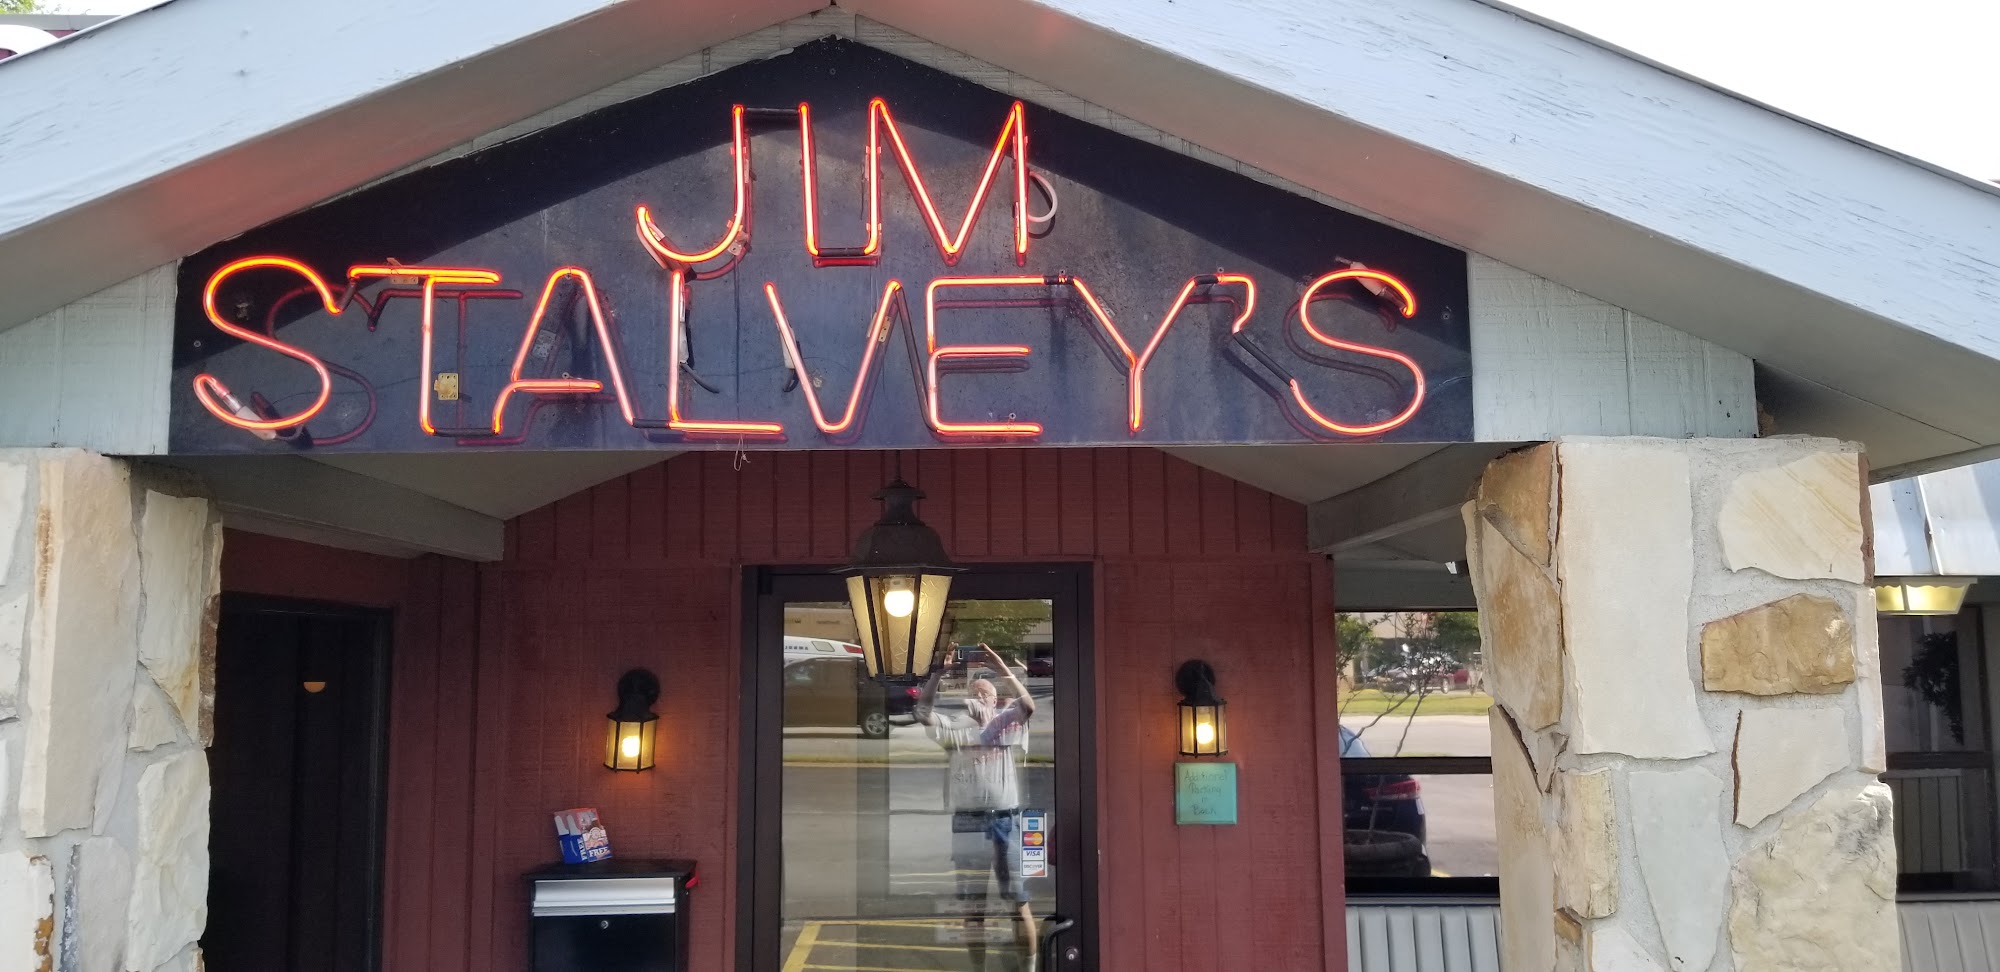 Stalvey's Restaurant & Lounge